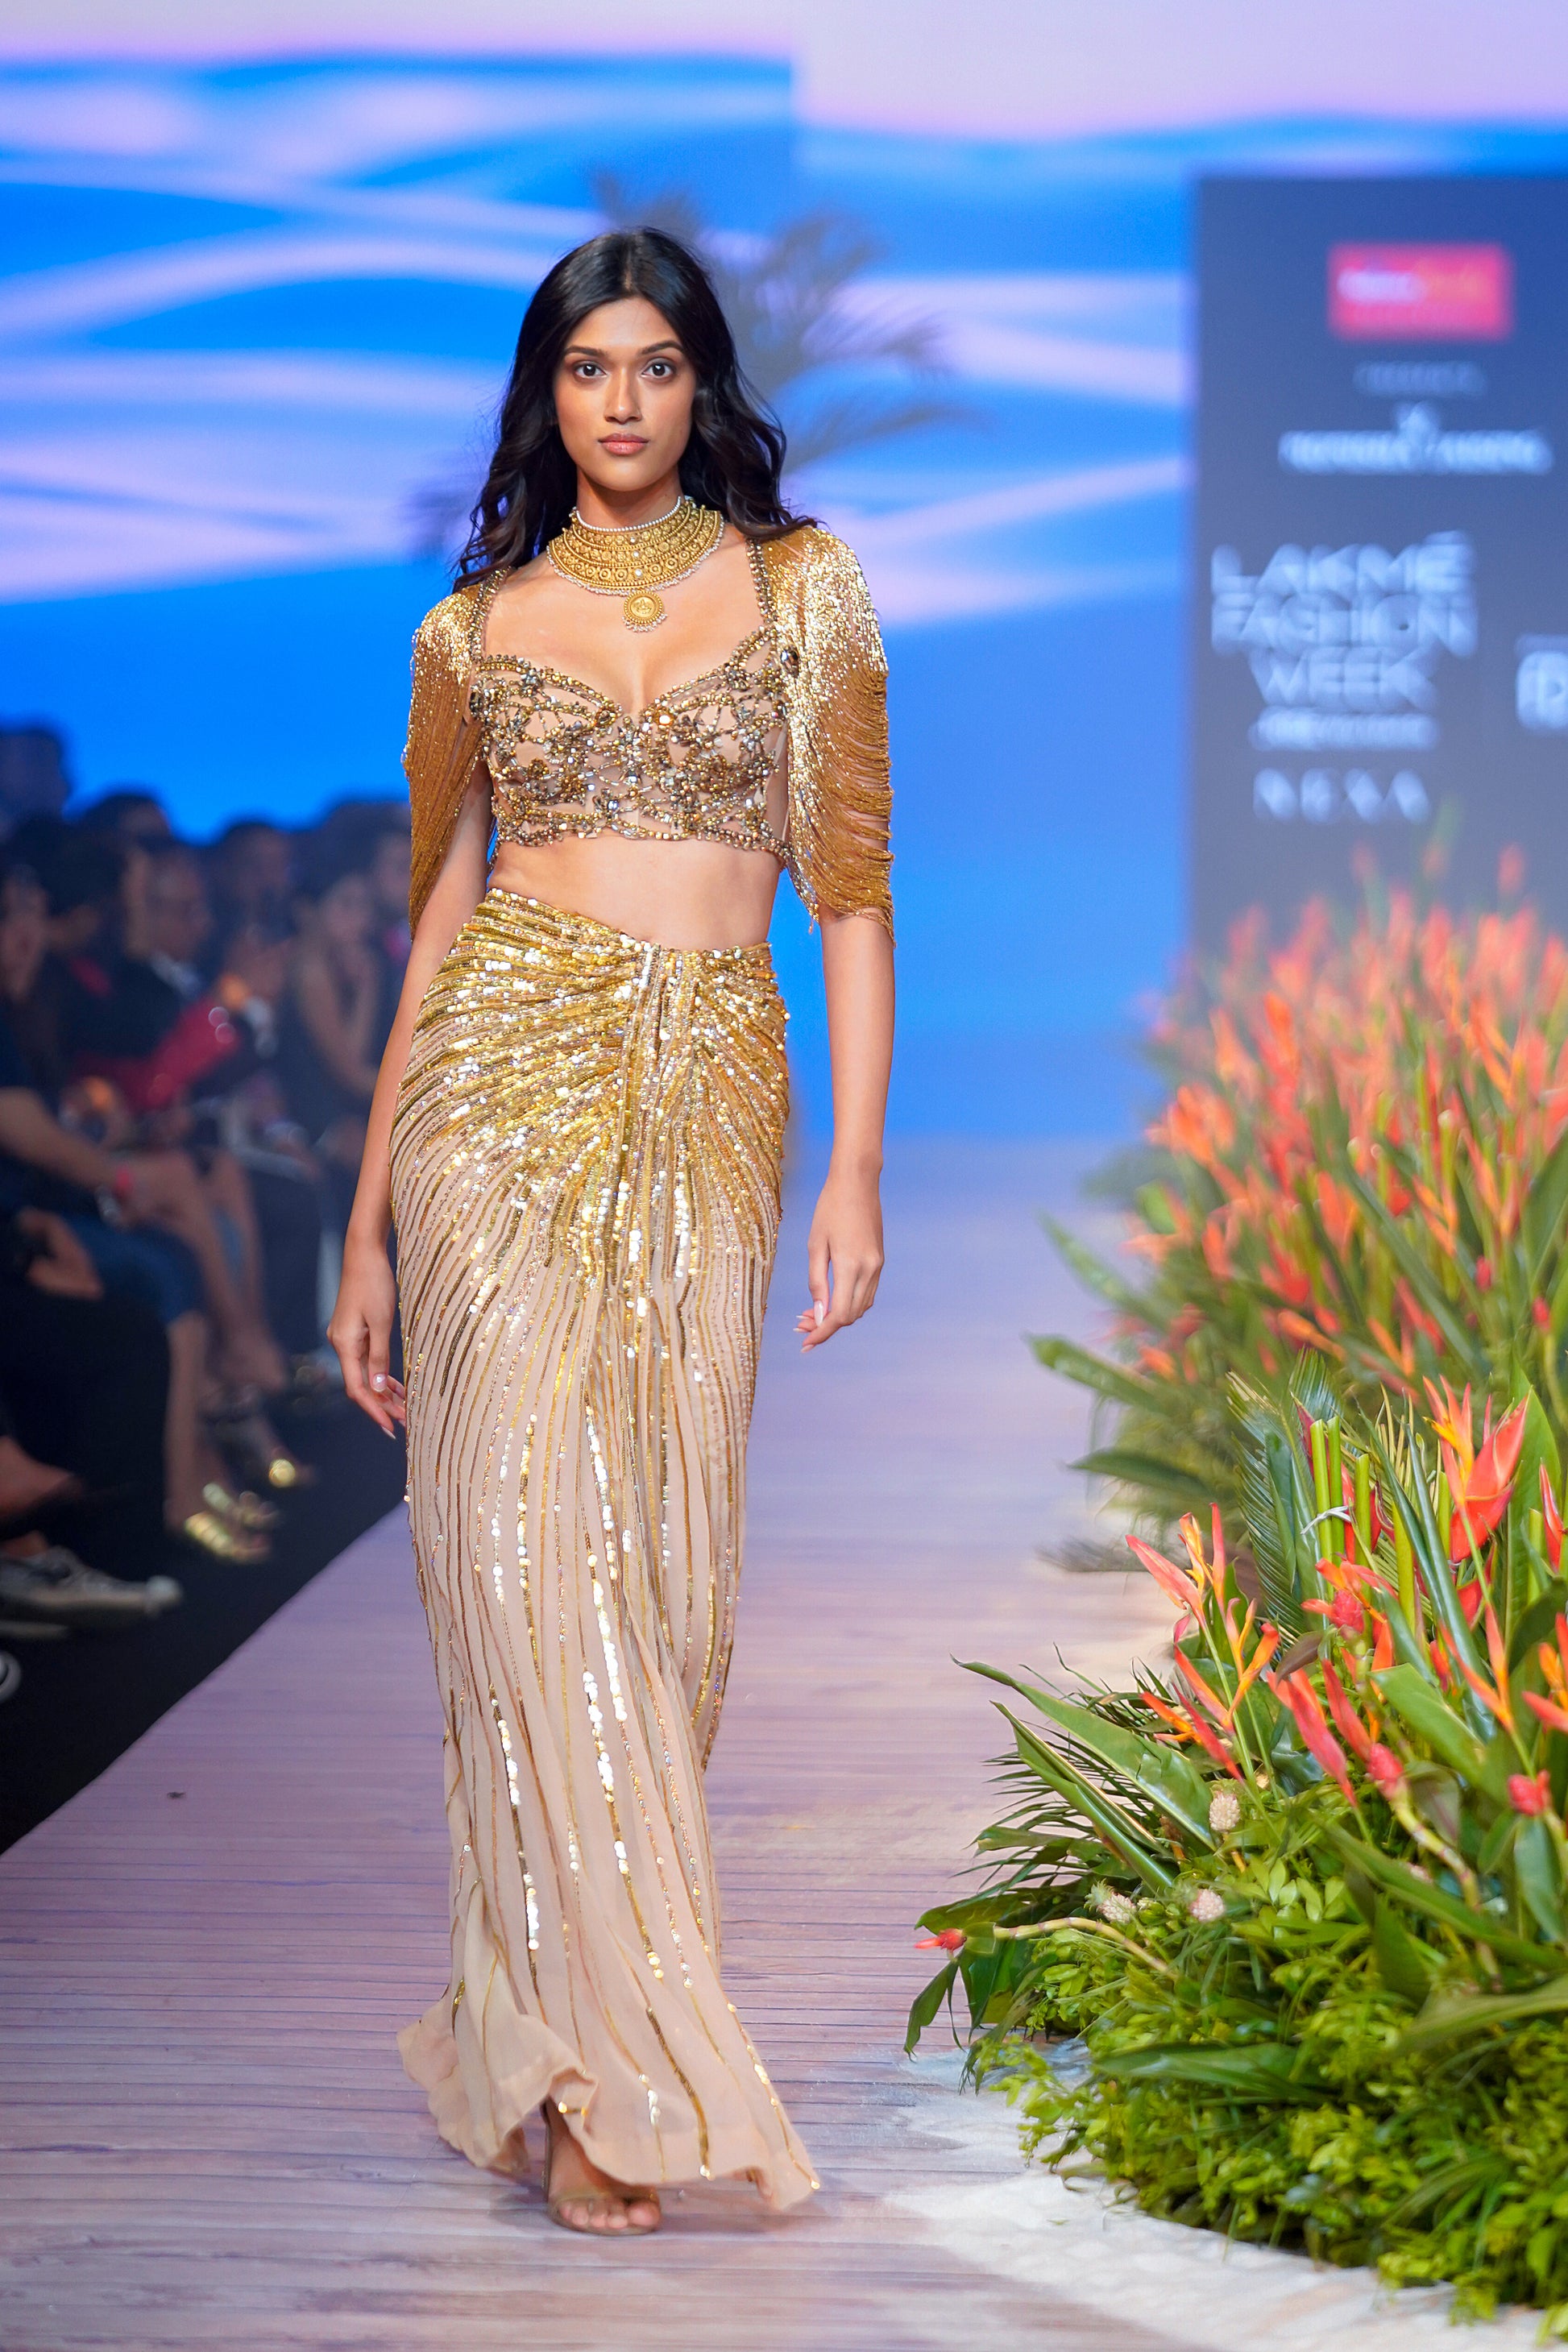 Gold Linear Draped Skirt with Jewelled Top – Monisha Jaising